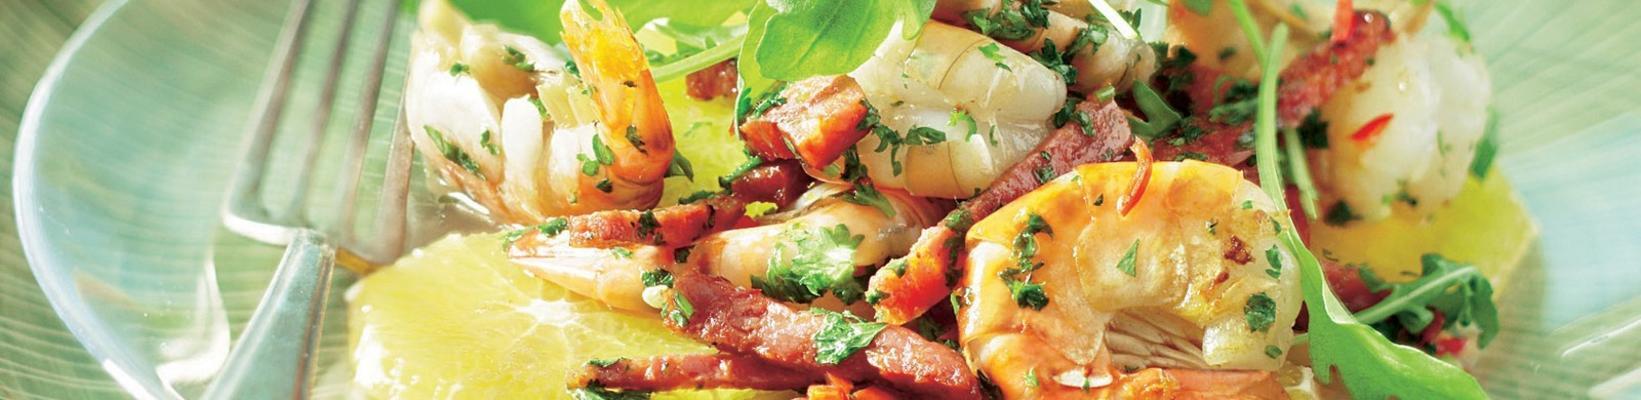 shrimp salad with arugula and orange